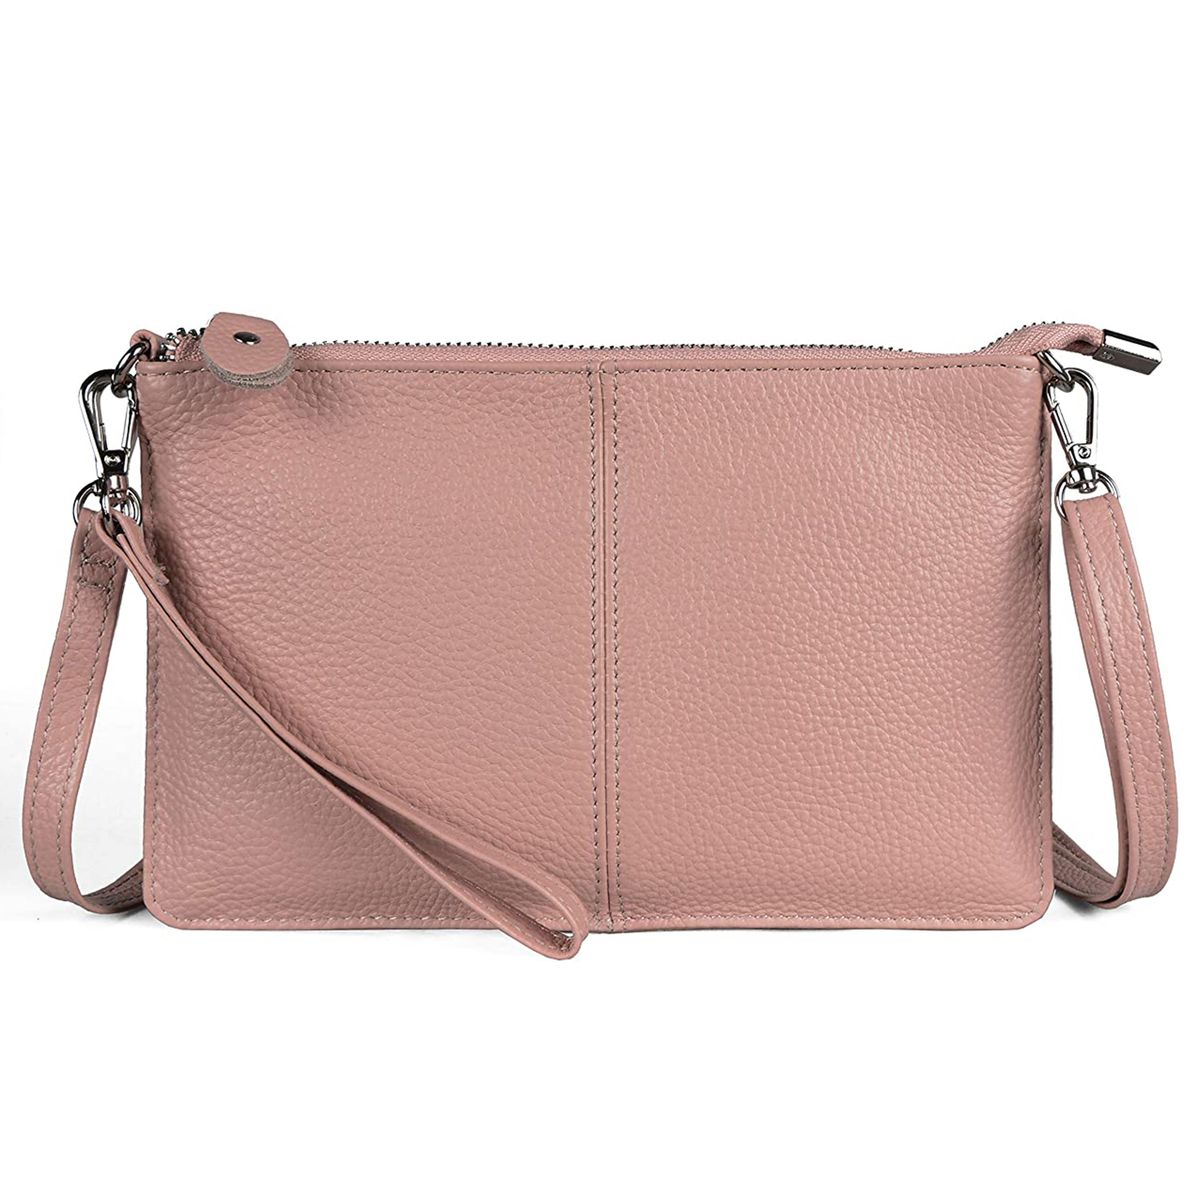 Befen Leather Wristlet Clutch Wallet Purses Small Flat Crossbody Bags